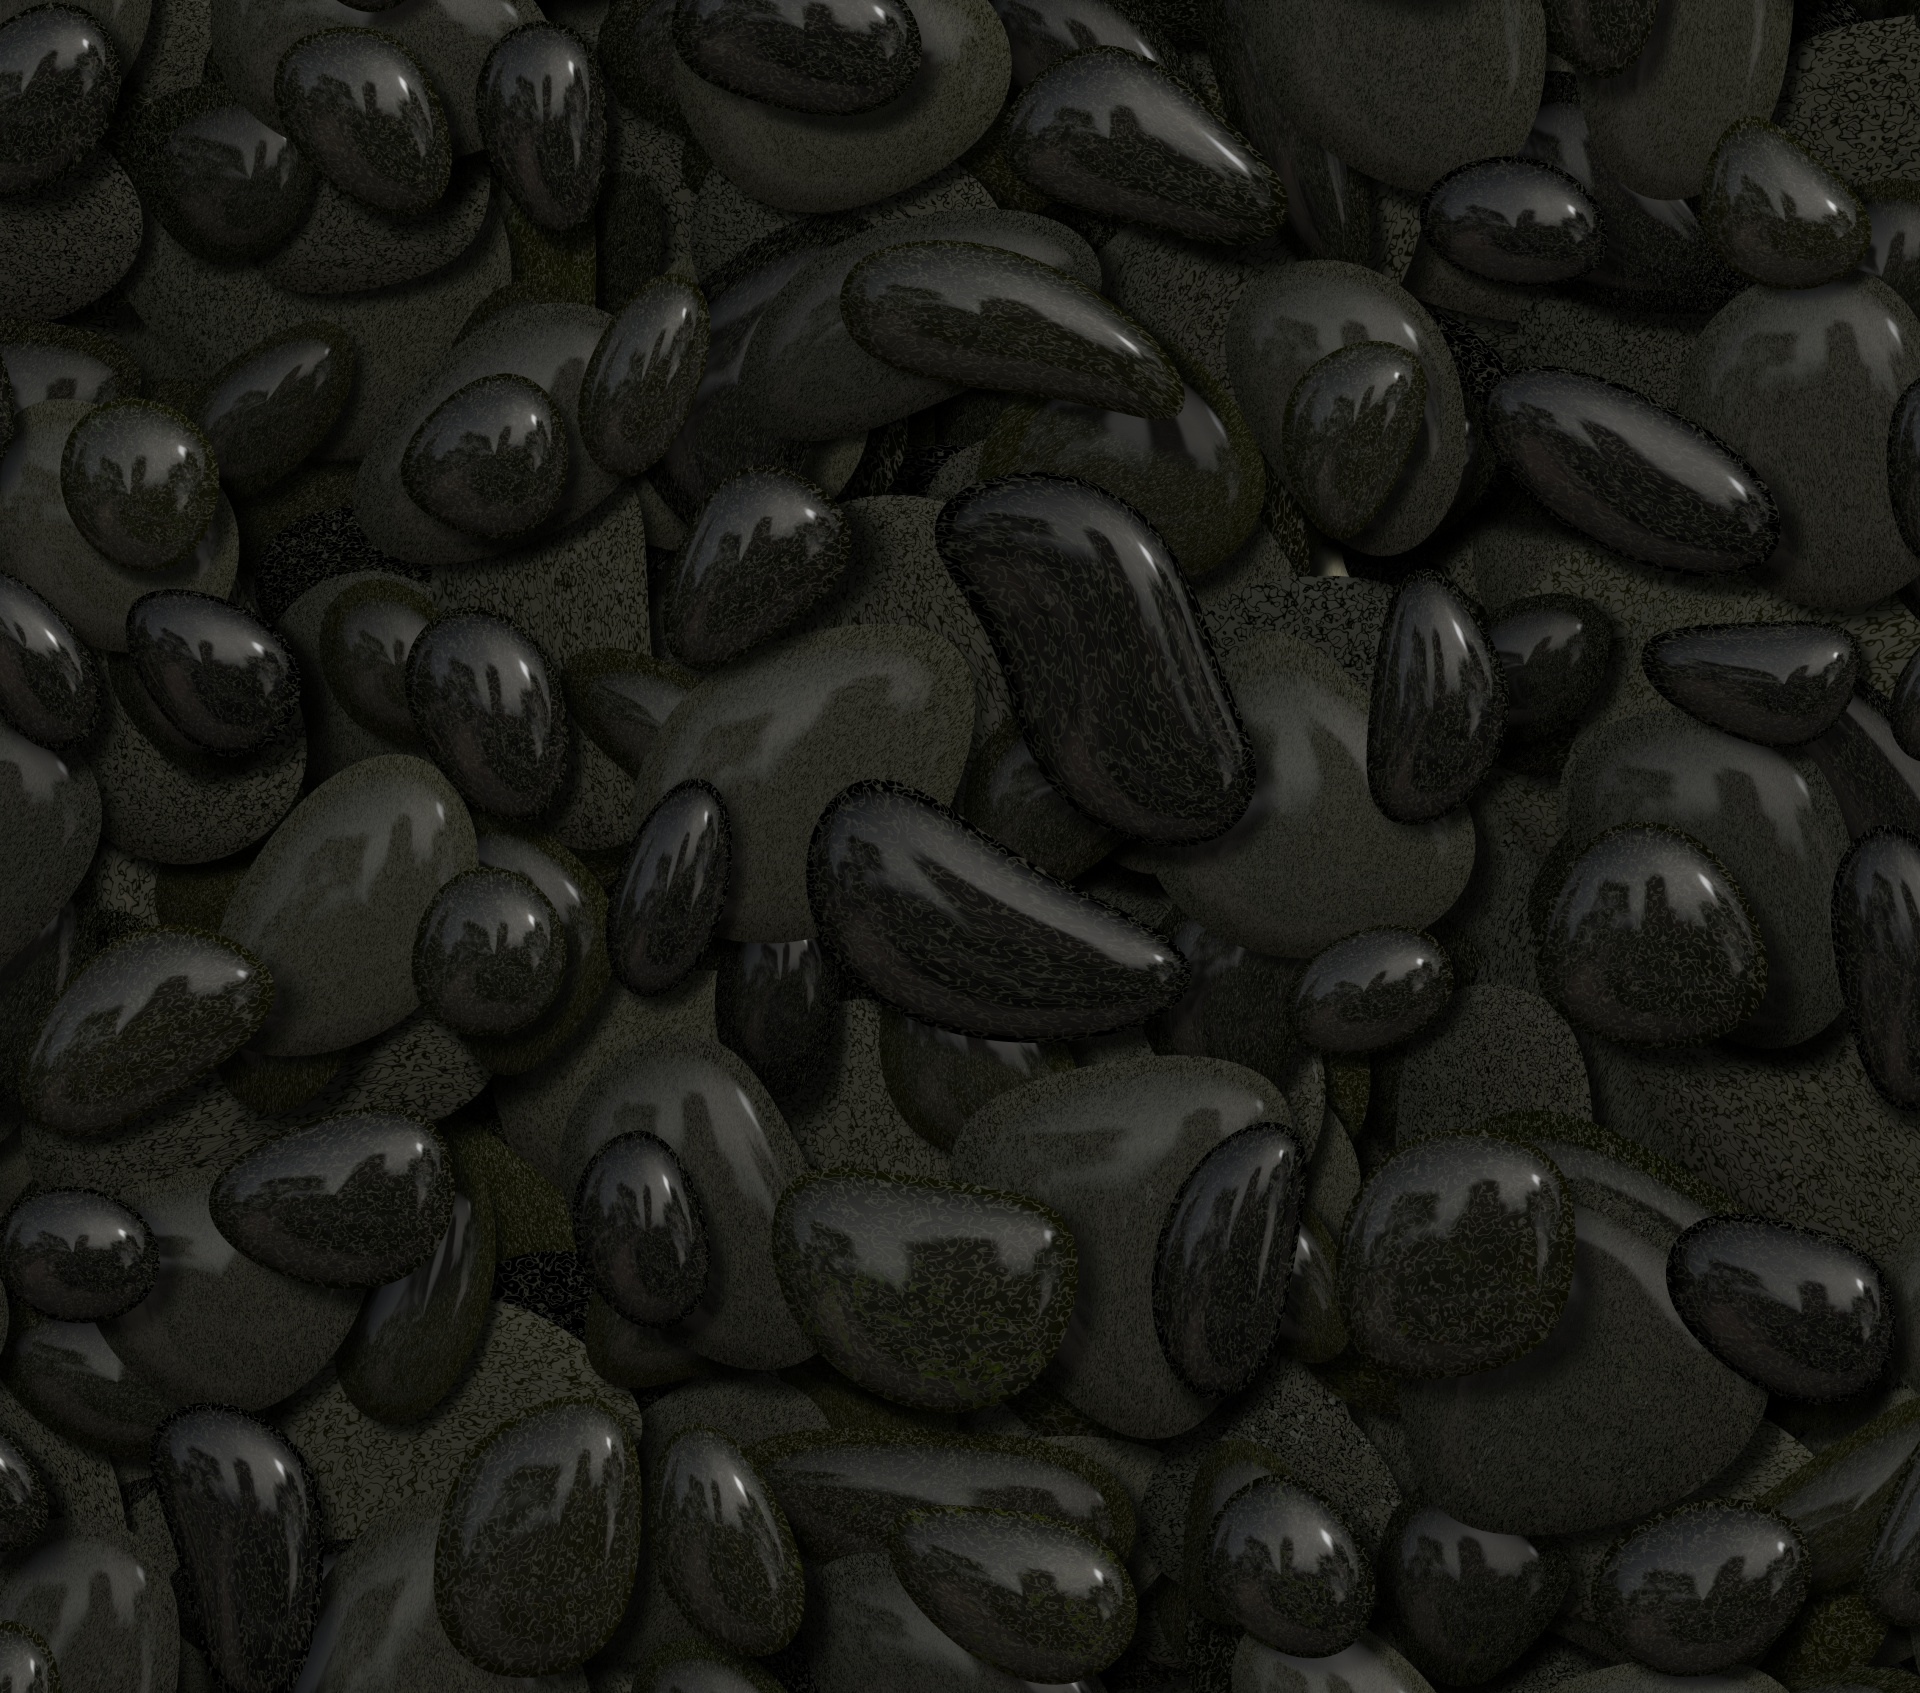 Black Pebbles Background